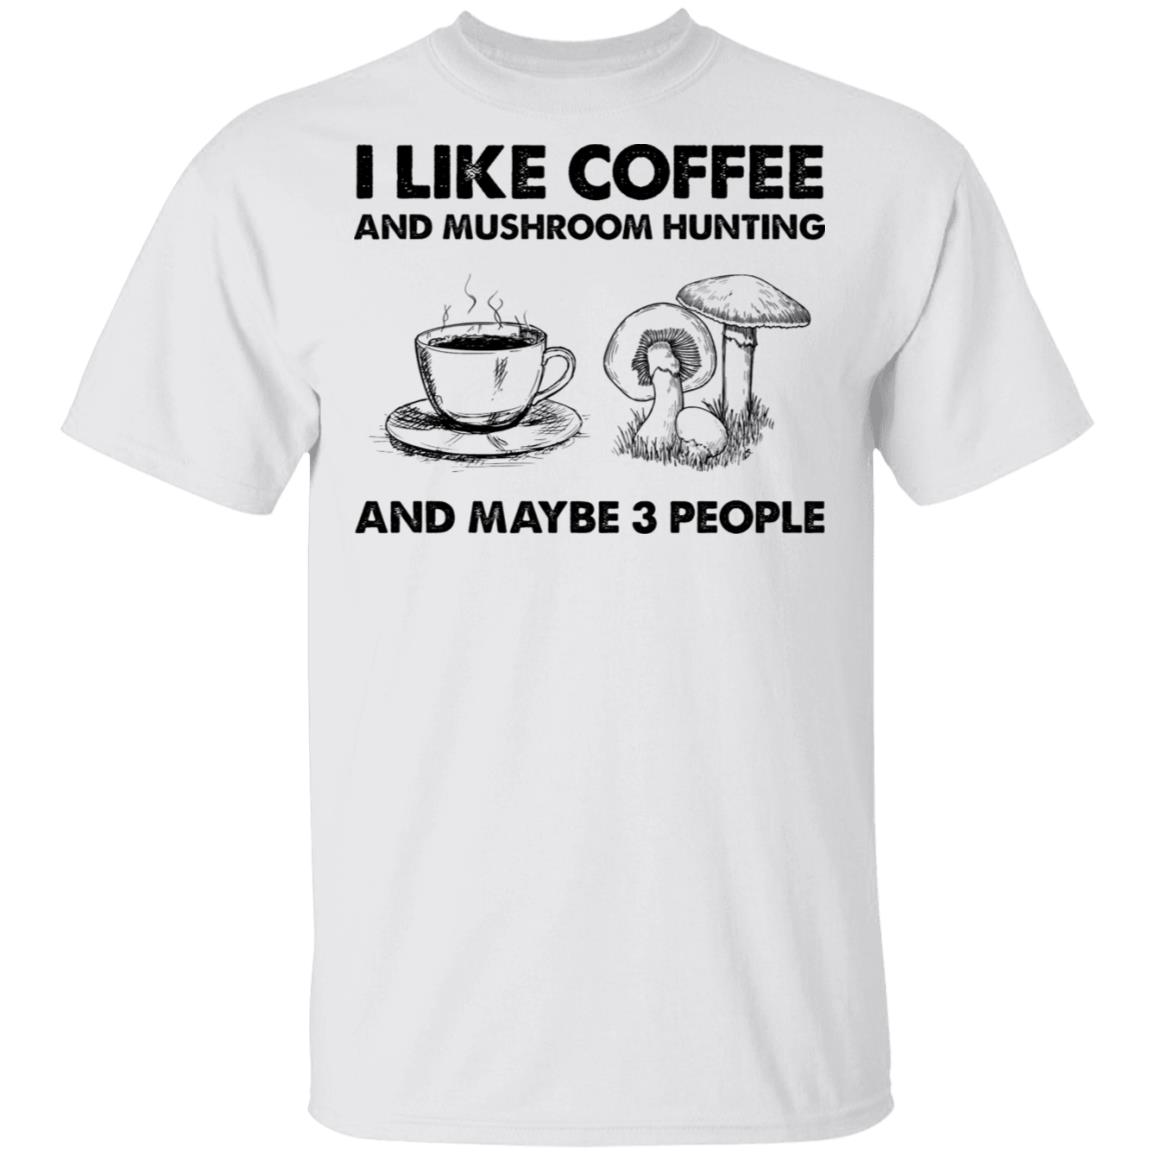 I like coffee and mushroom hunting and maybe 3 people